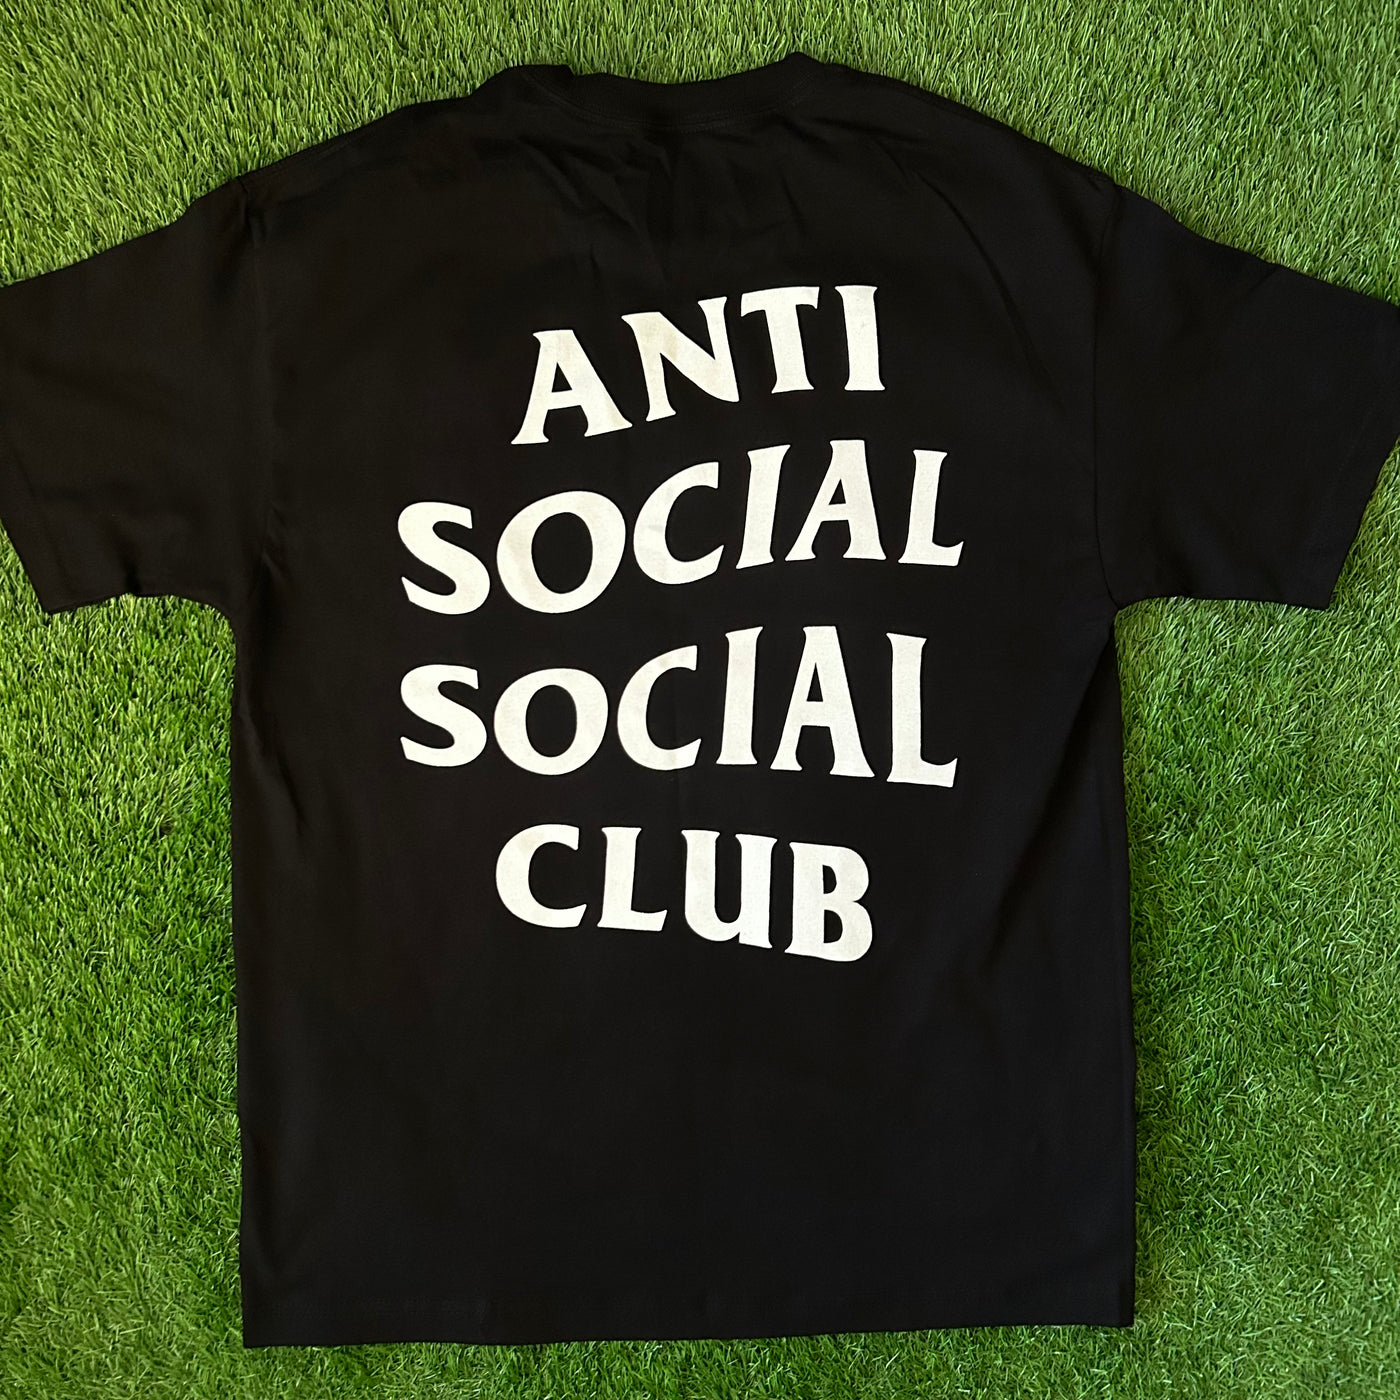 Anti Social Social Club Black Classic Tee